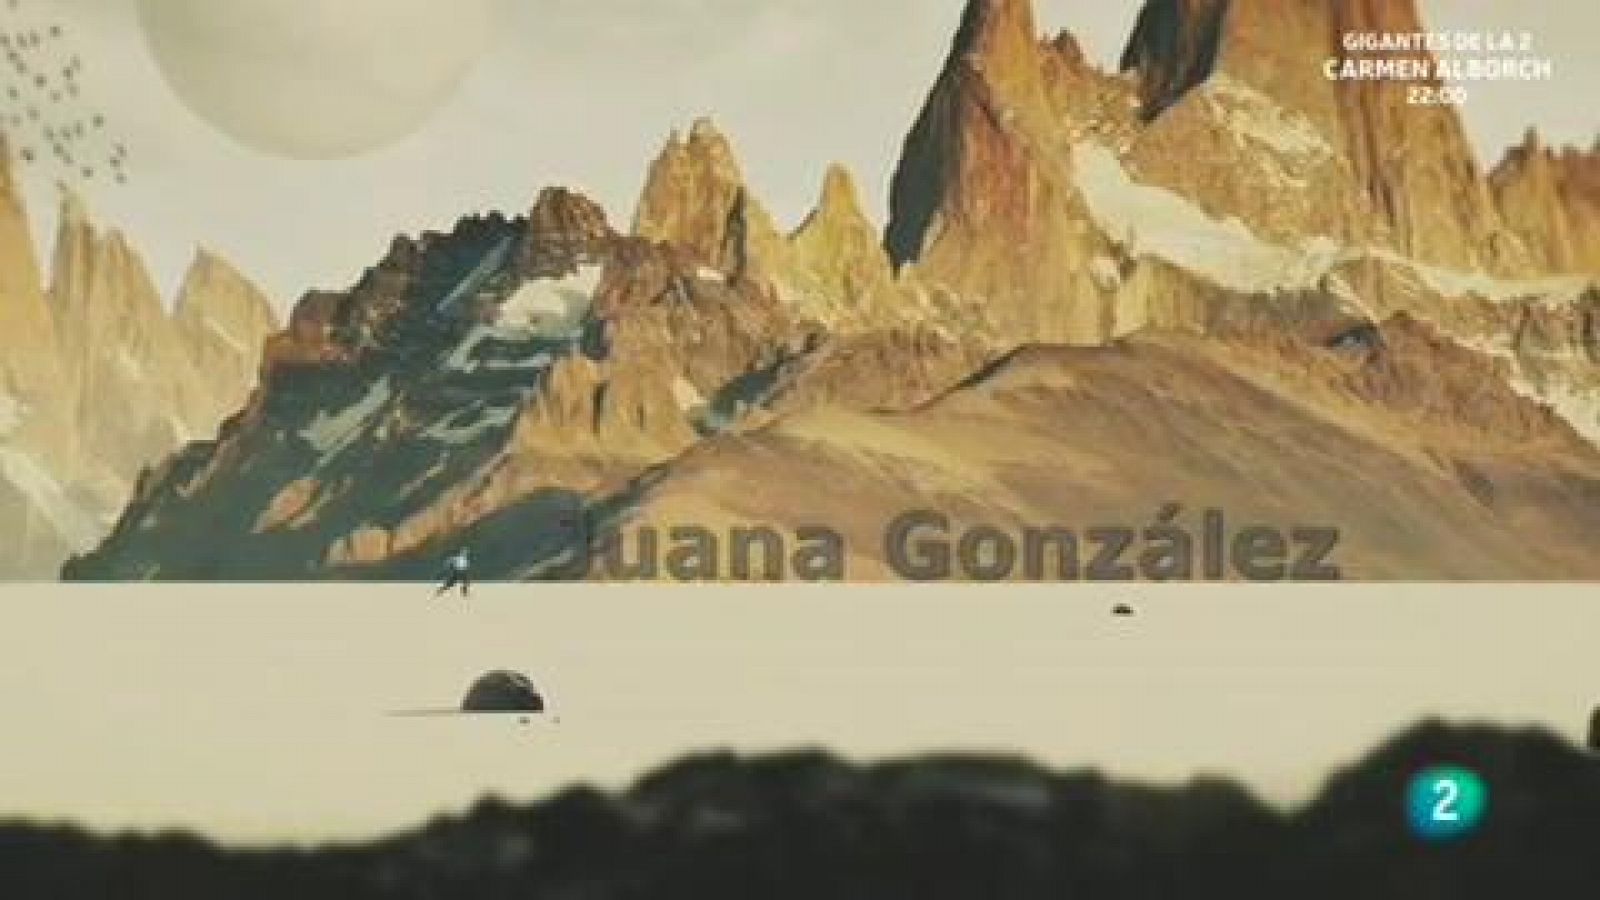 La aventura del Saber: Boek Visual con Juana González. | RTVE Play